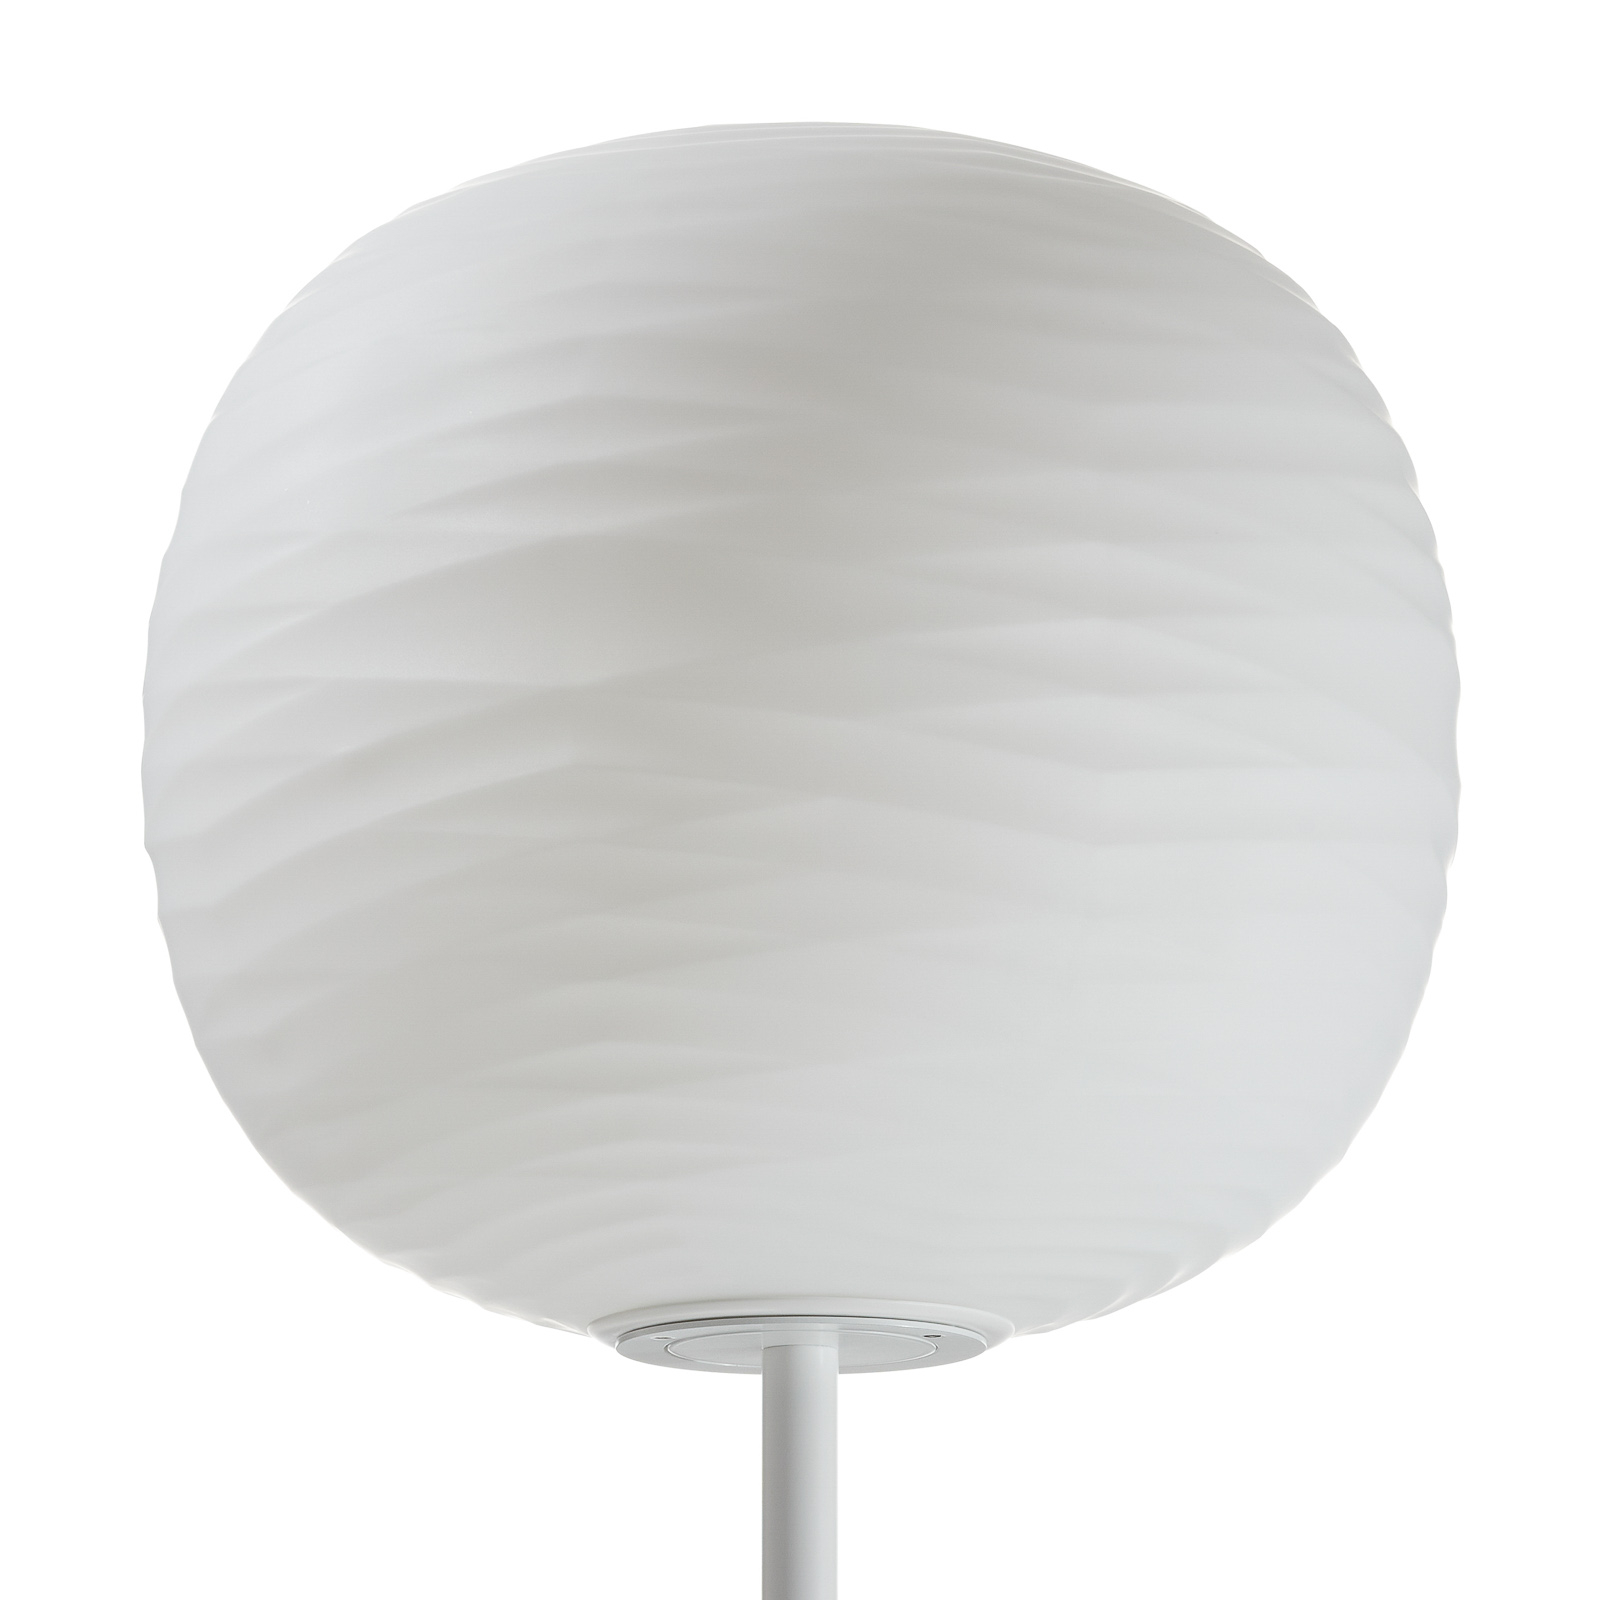 Foscarini Gem tavolo alta table lamp, white